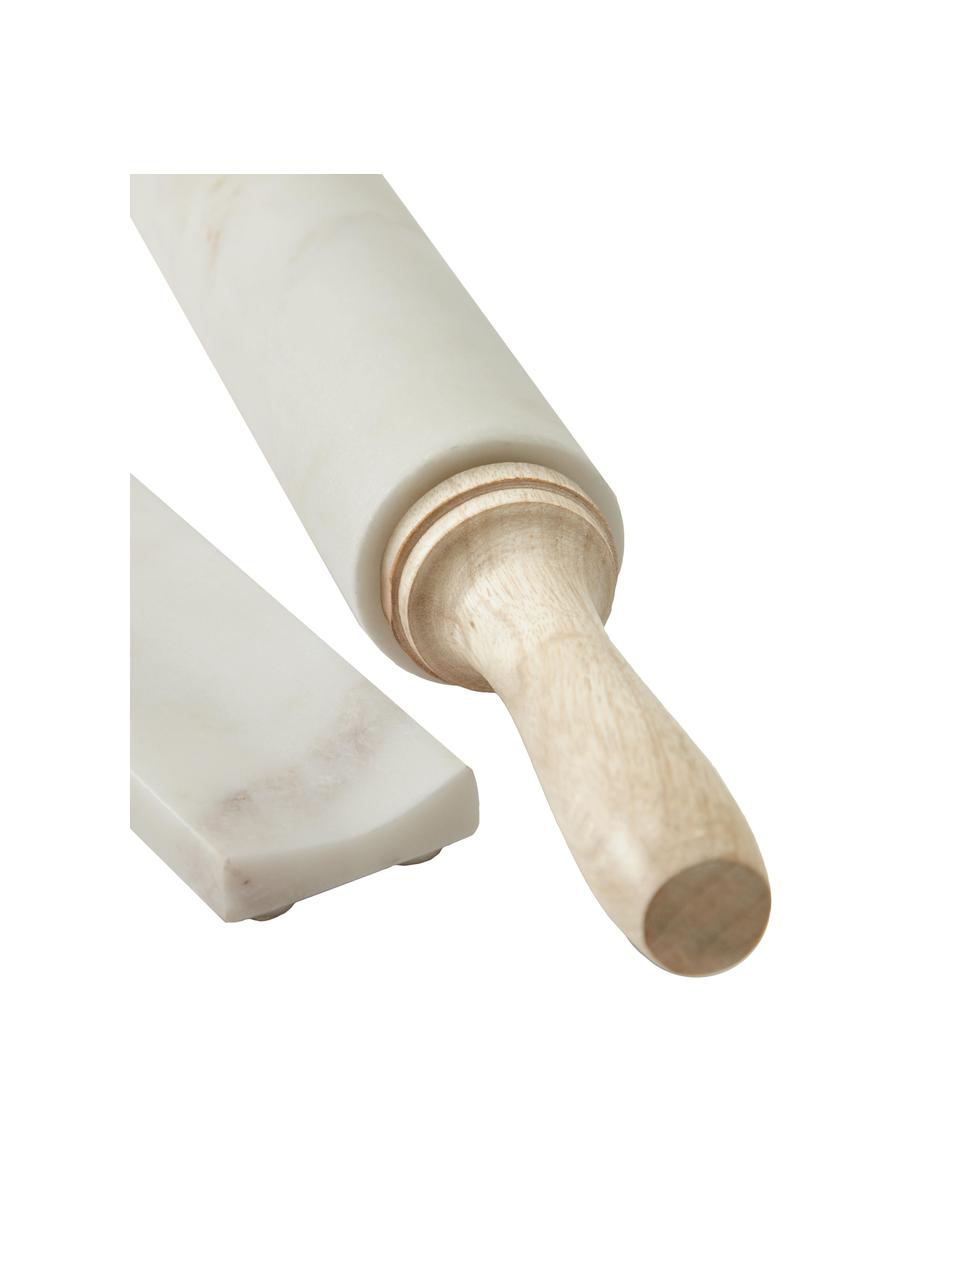 Marmor-Nudelholz mit Auflage Aimil, Griffe: Holz, Weiß, marmoriert, Helles Holz, Ø 7 x L 41 cm